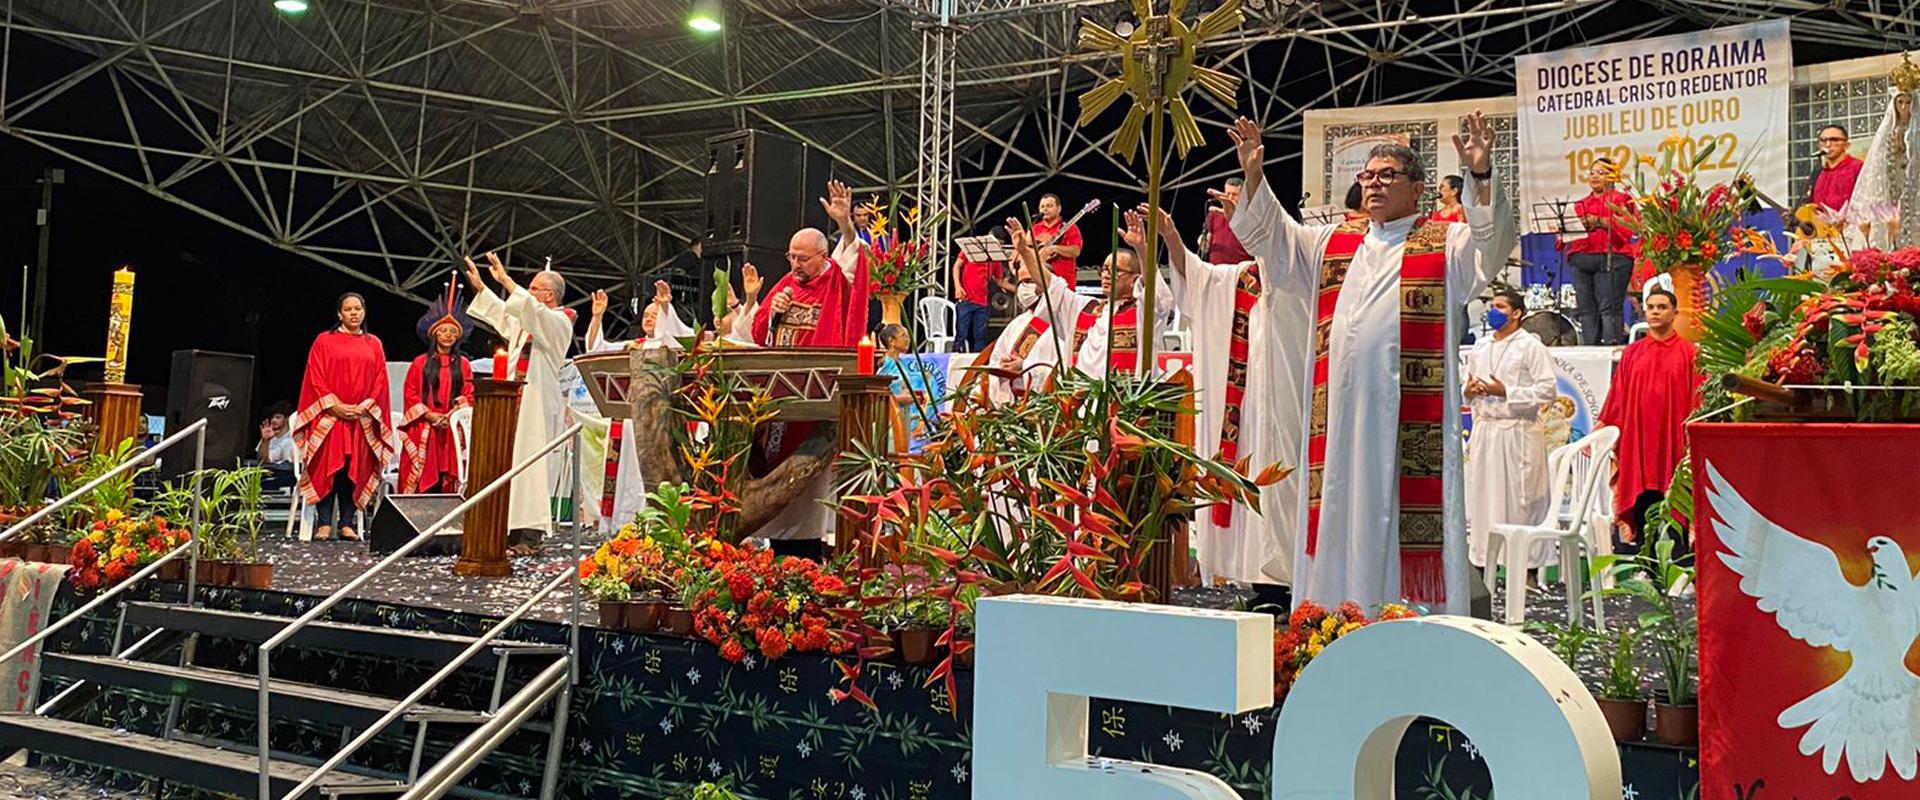 Festa de Pentecostes é marcada pela vivência da unidade na Diocese de Roraima